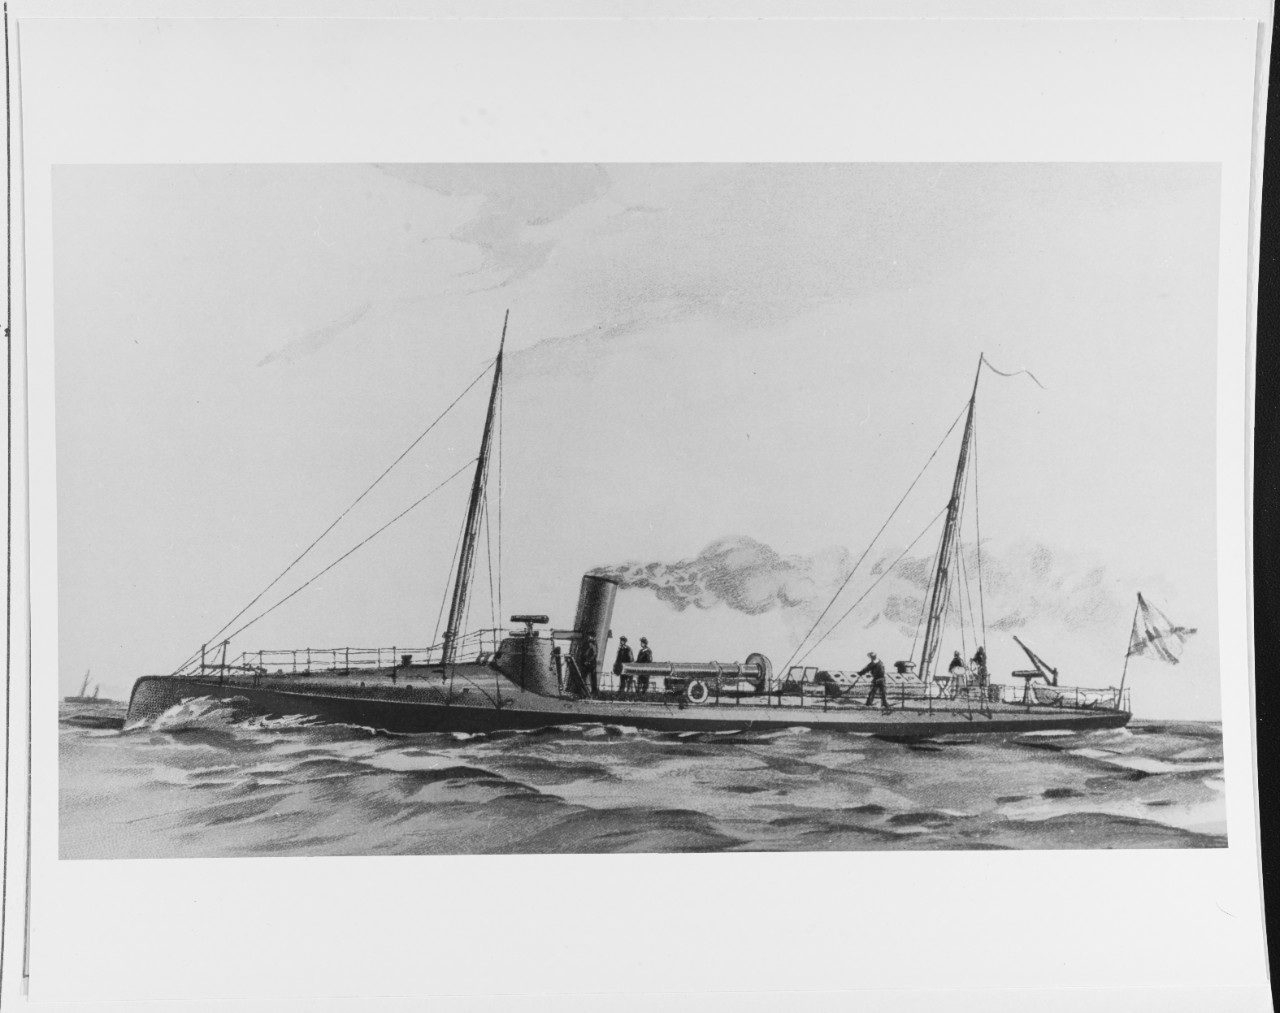 ROTCHENSALM (Russian torpedo boat, 1890)